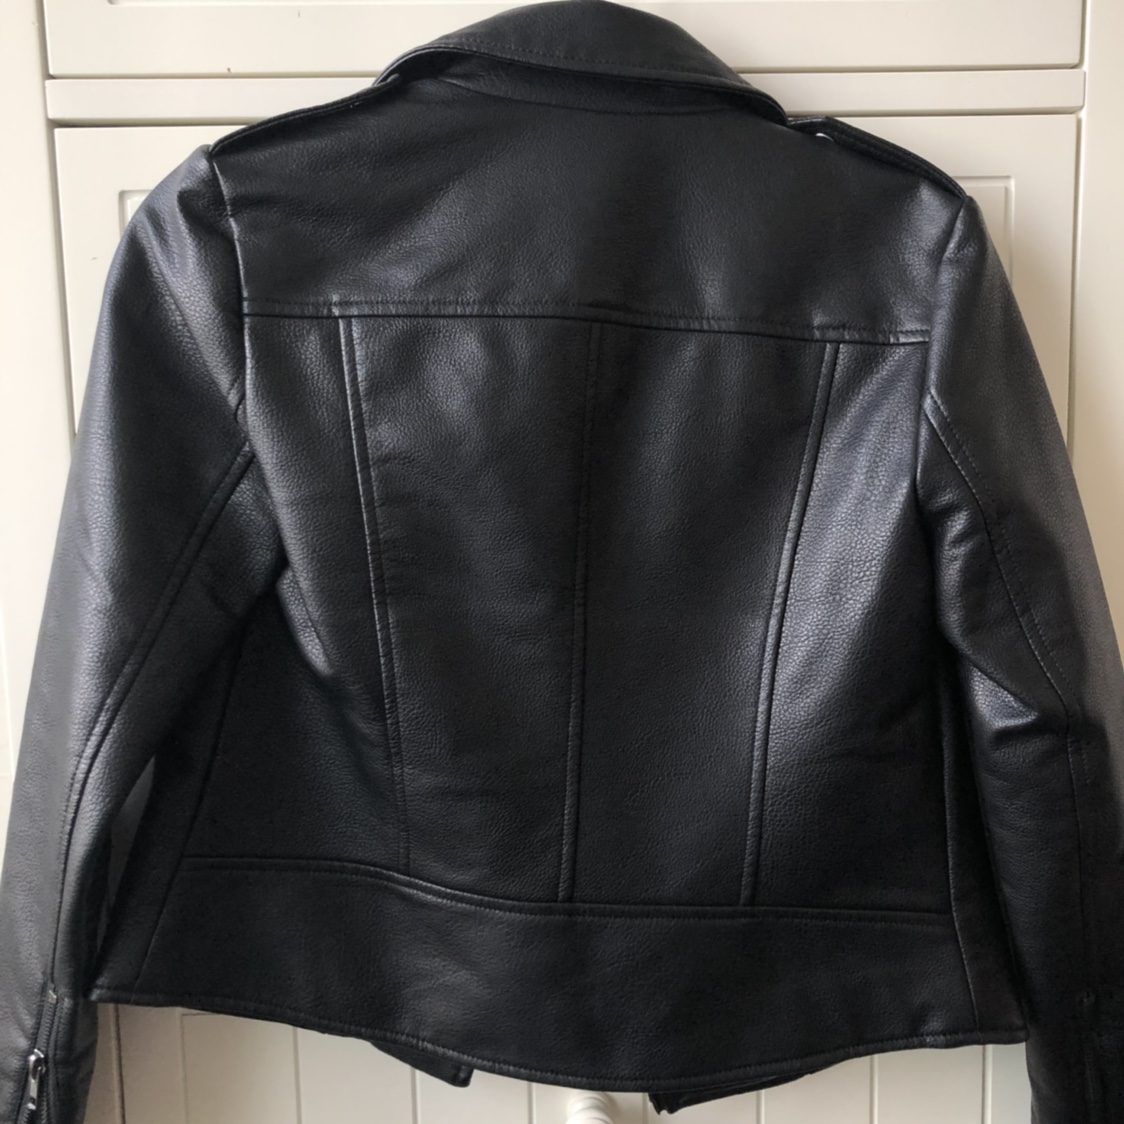 Mens Fashion BDG Black Leather Jacket - AirBorne Jacket